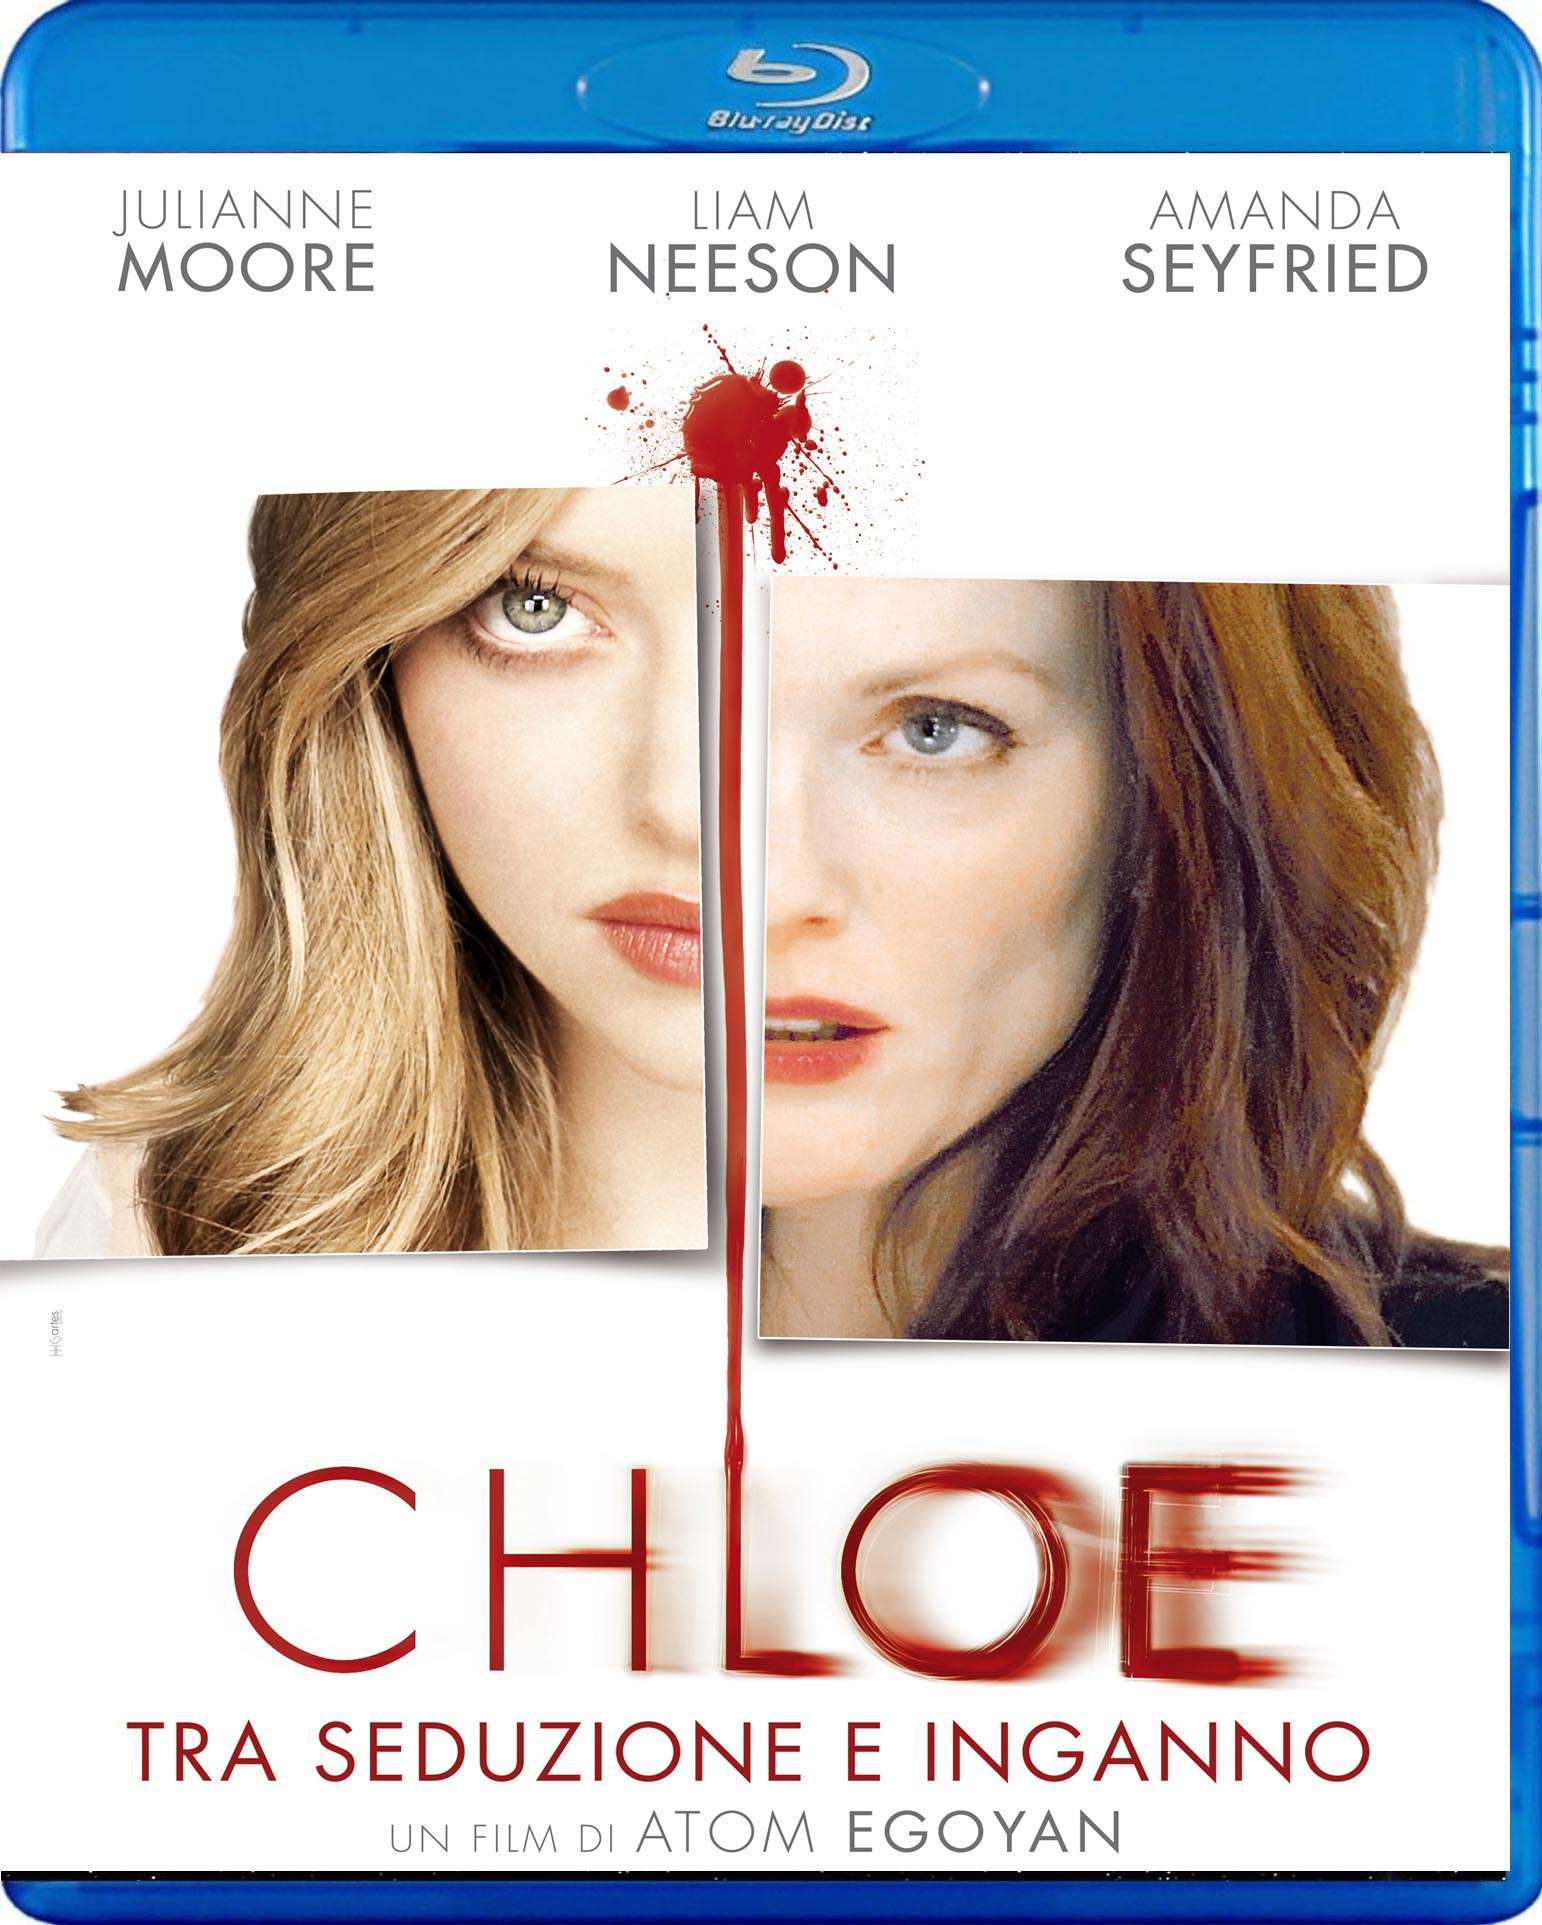 Chloe - Tra seduzione e inganno (2009) HD 720p Ac3 ITA (DVD Resync) DTS Ac3 ENG Sub ITA